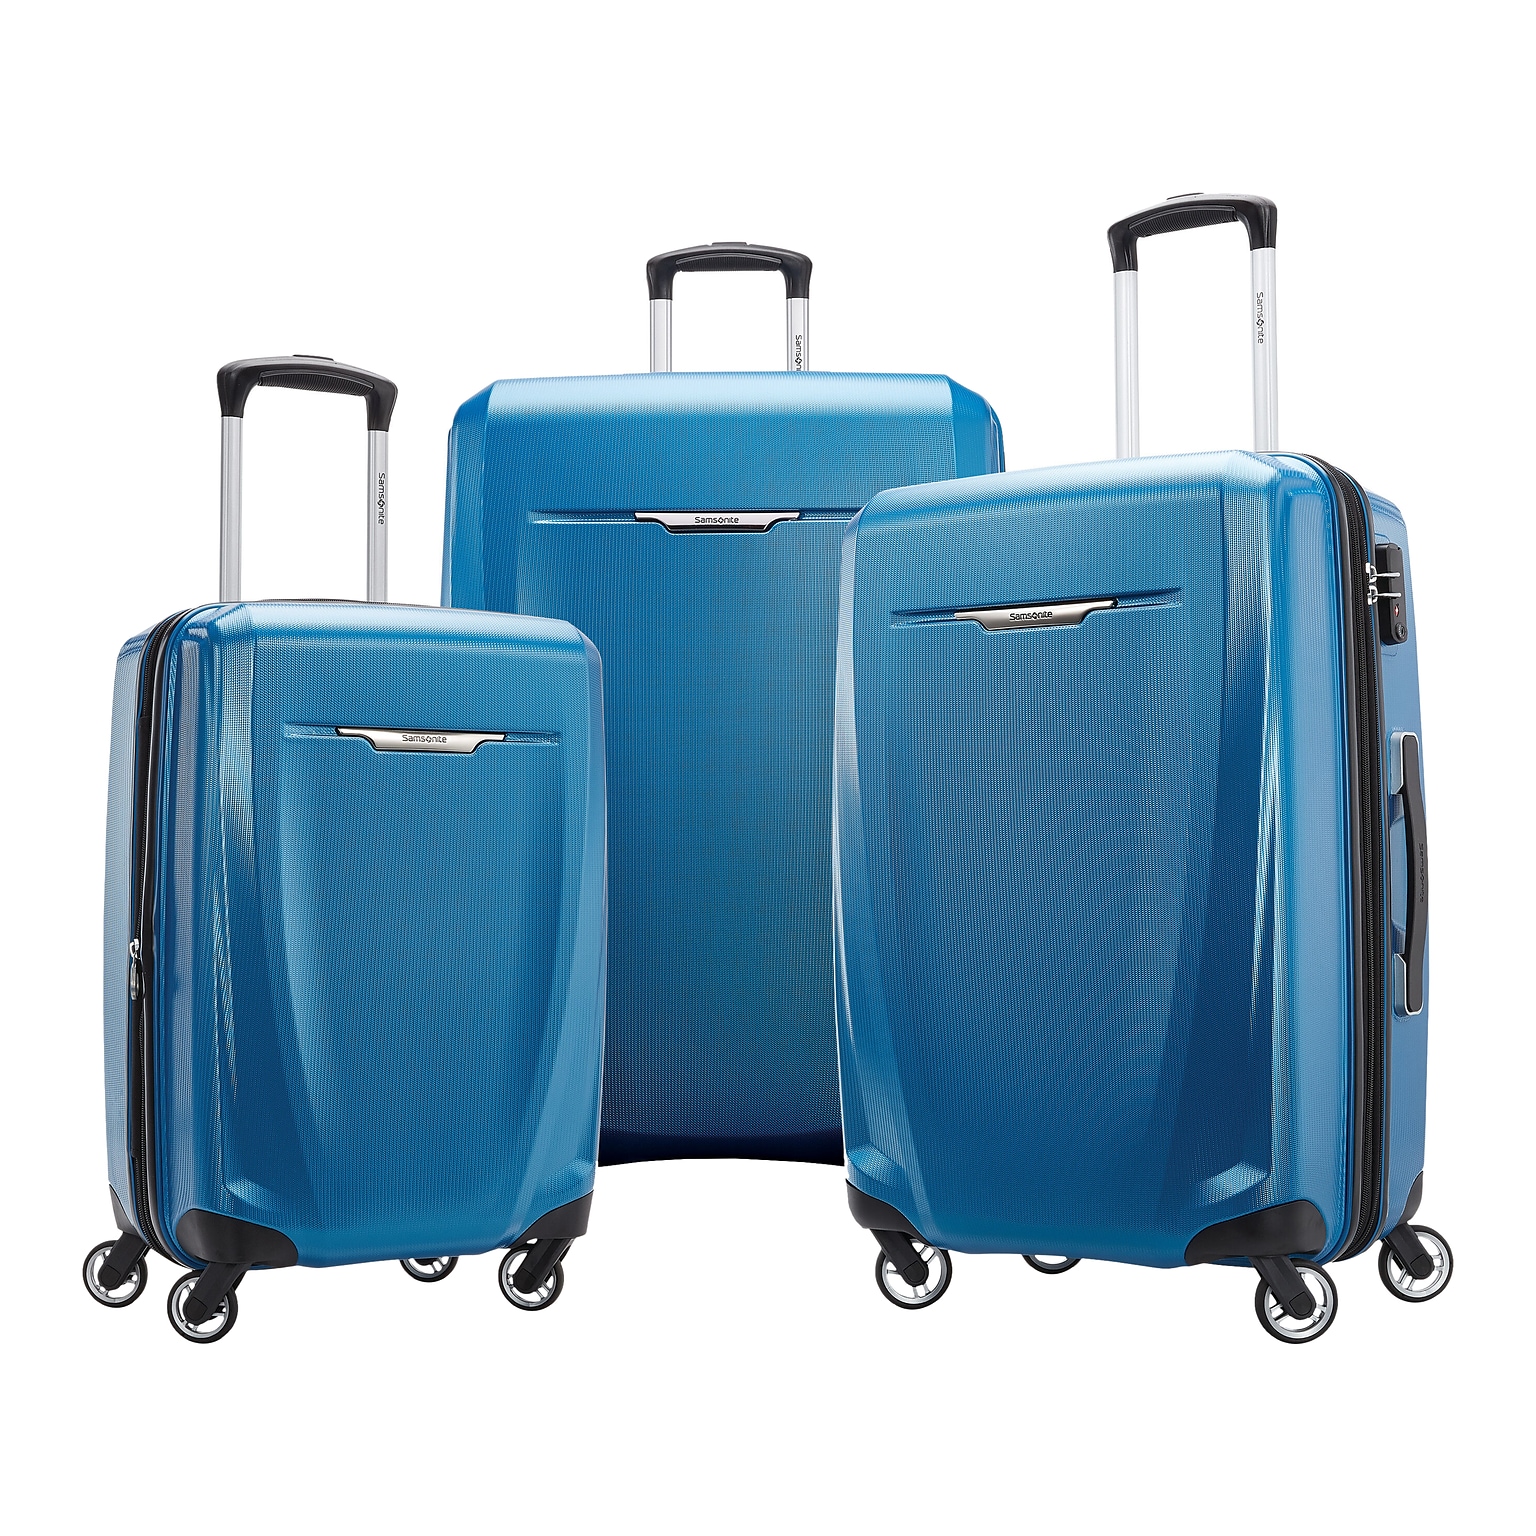 Samsonite Winfield 3 DLX Polycarbonate 3-Piece Luggage Set, Blue/Navy (120751-1112)